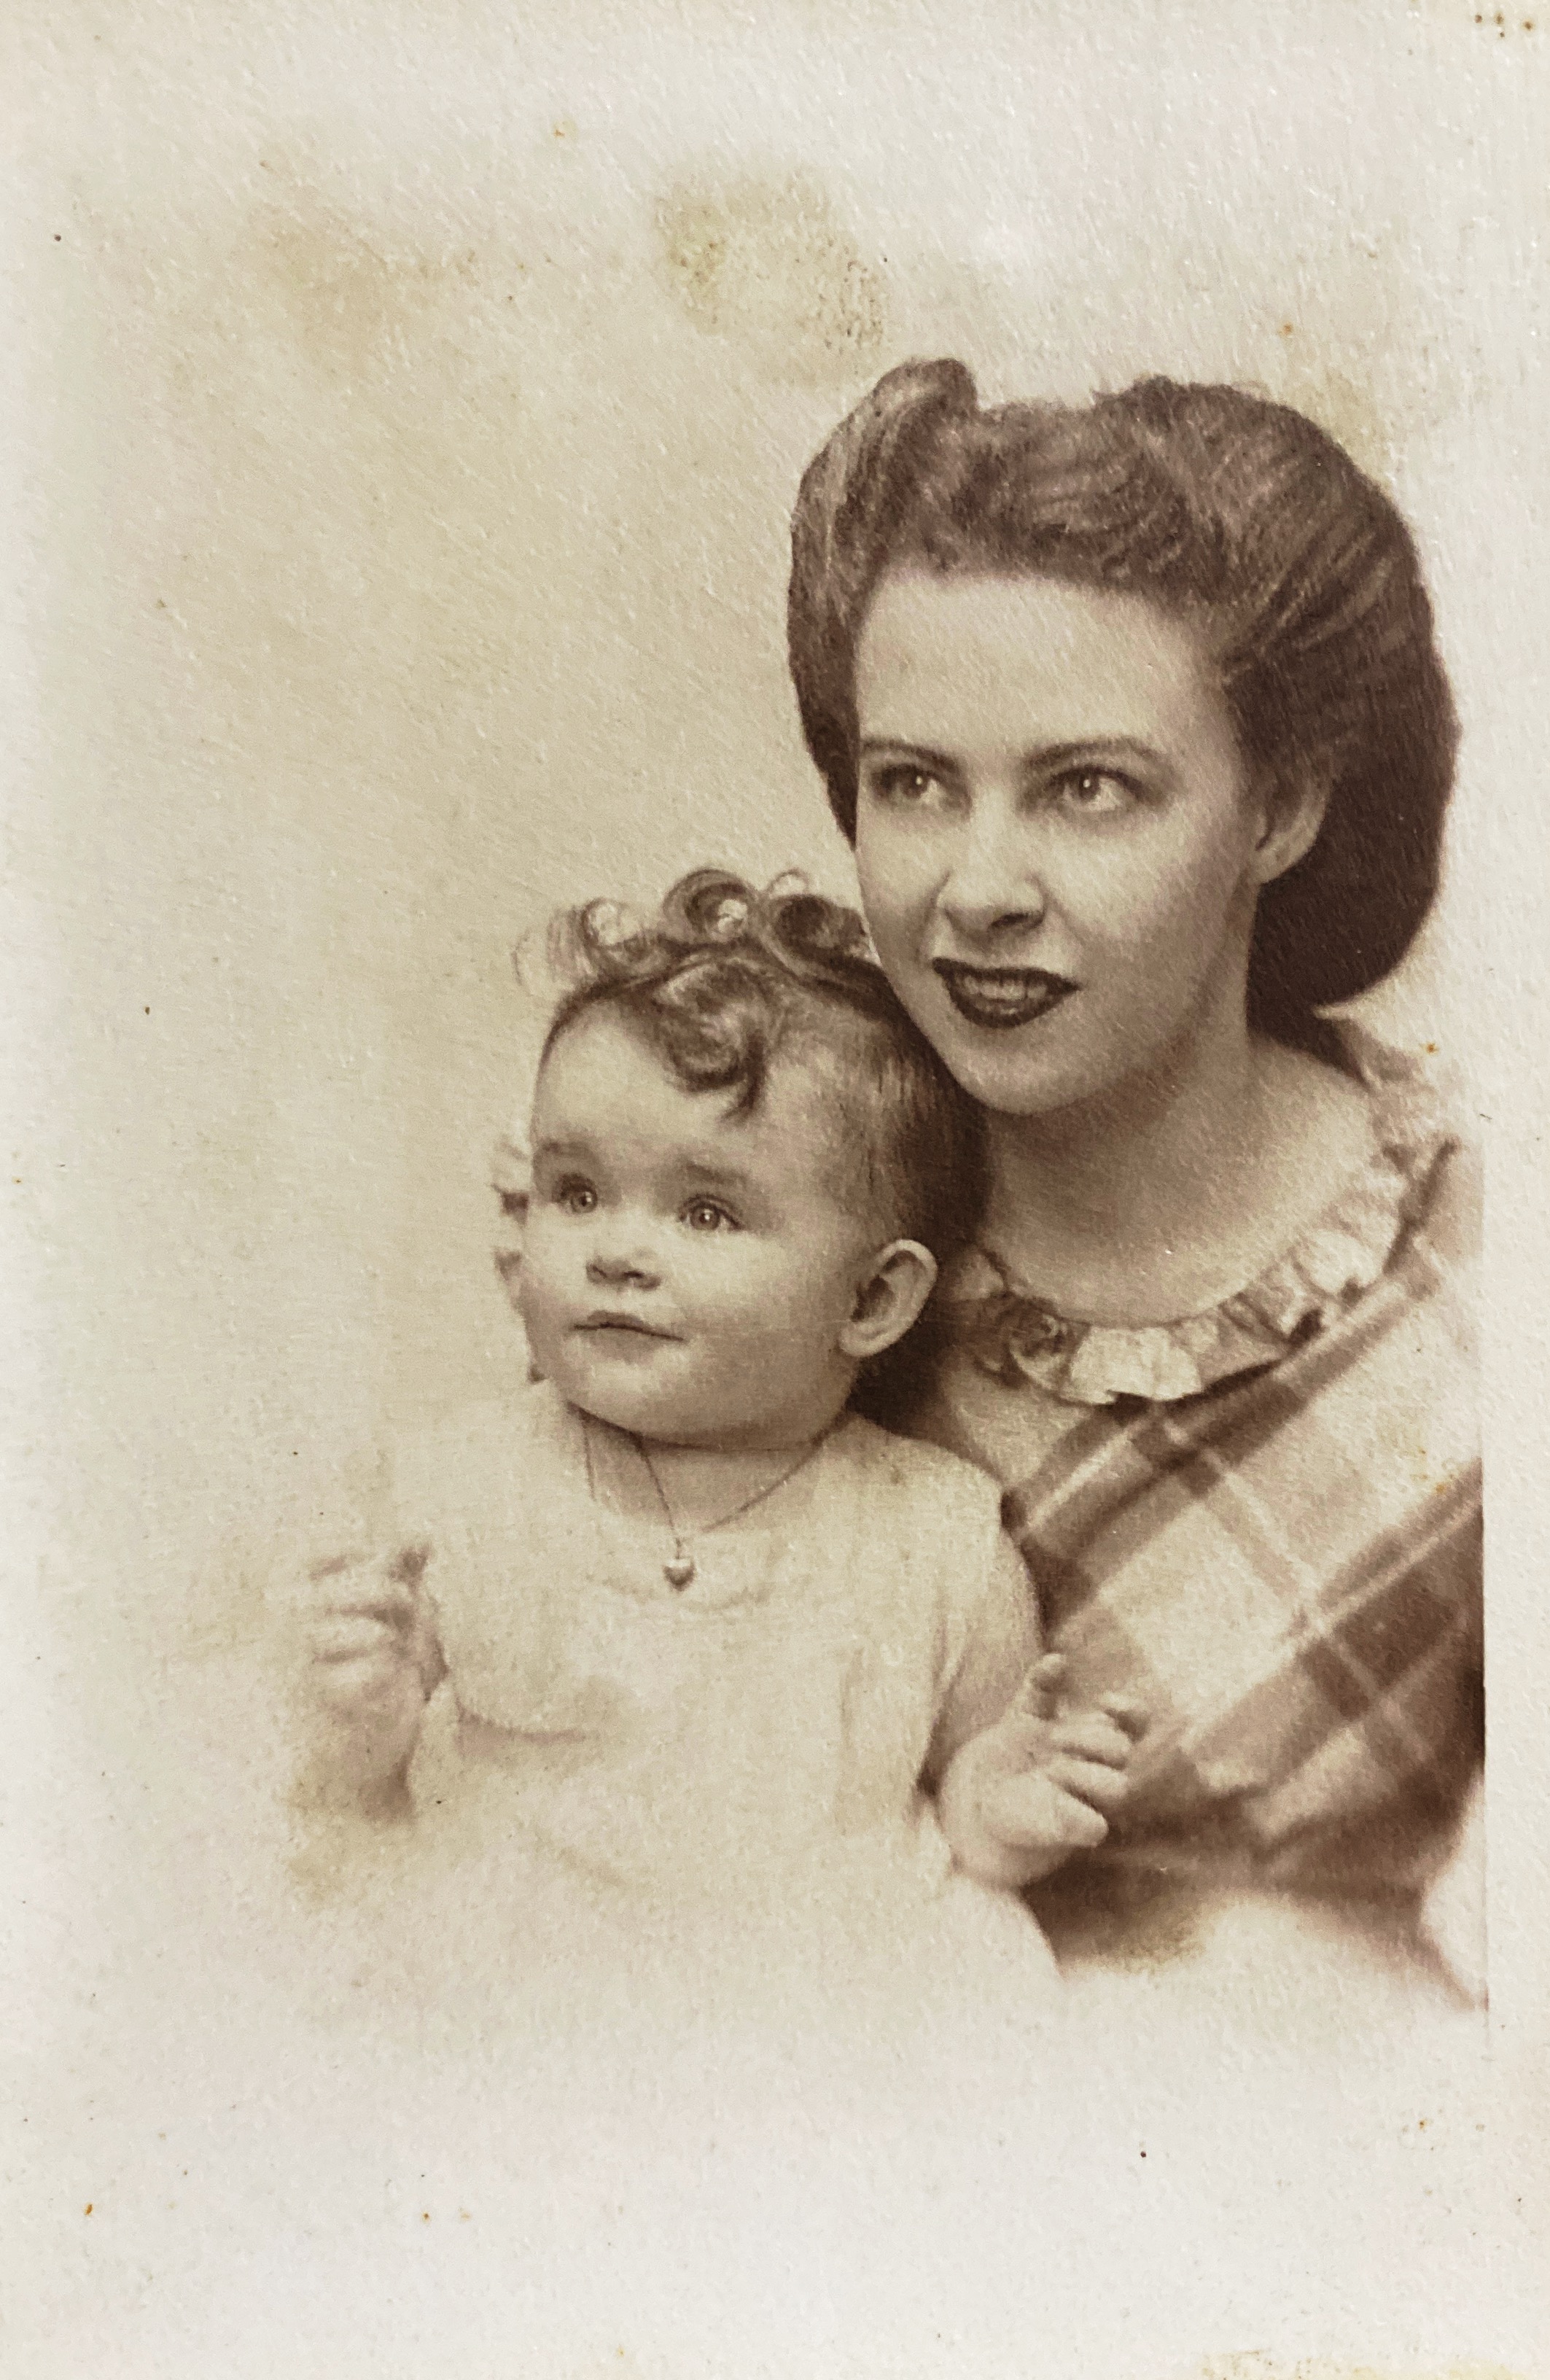 My Mom, Toni Porter Mathia, and Nana (Grandmother), Helen Anderson Porter, in 1945. 